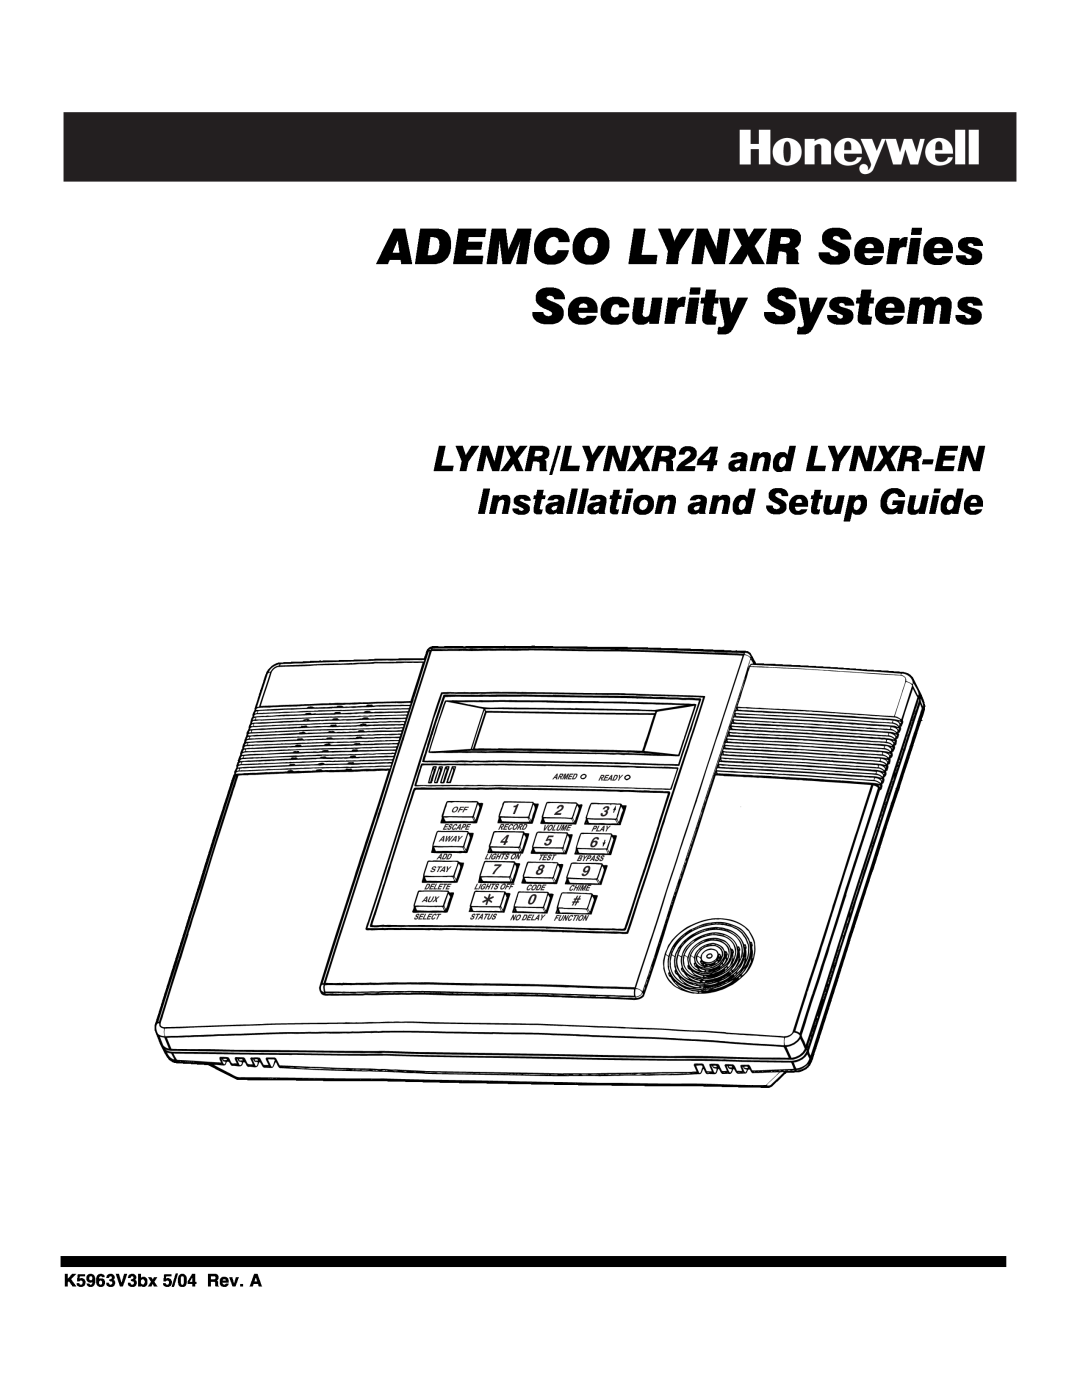 Honeywell setup guide K5963V3bx 5/04 Rev. A, ADEMCO LYNXR Series Security Systems, LYNXR/LYNXR24 and LYNXR-EN, PLAY3 